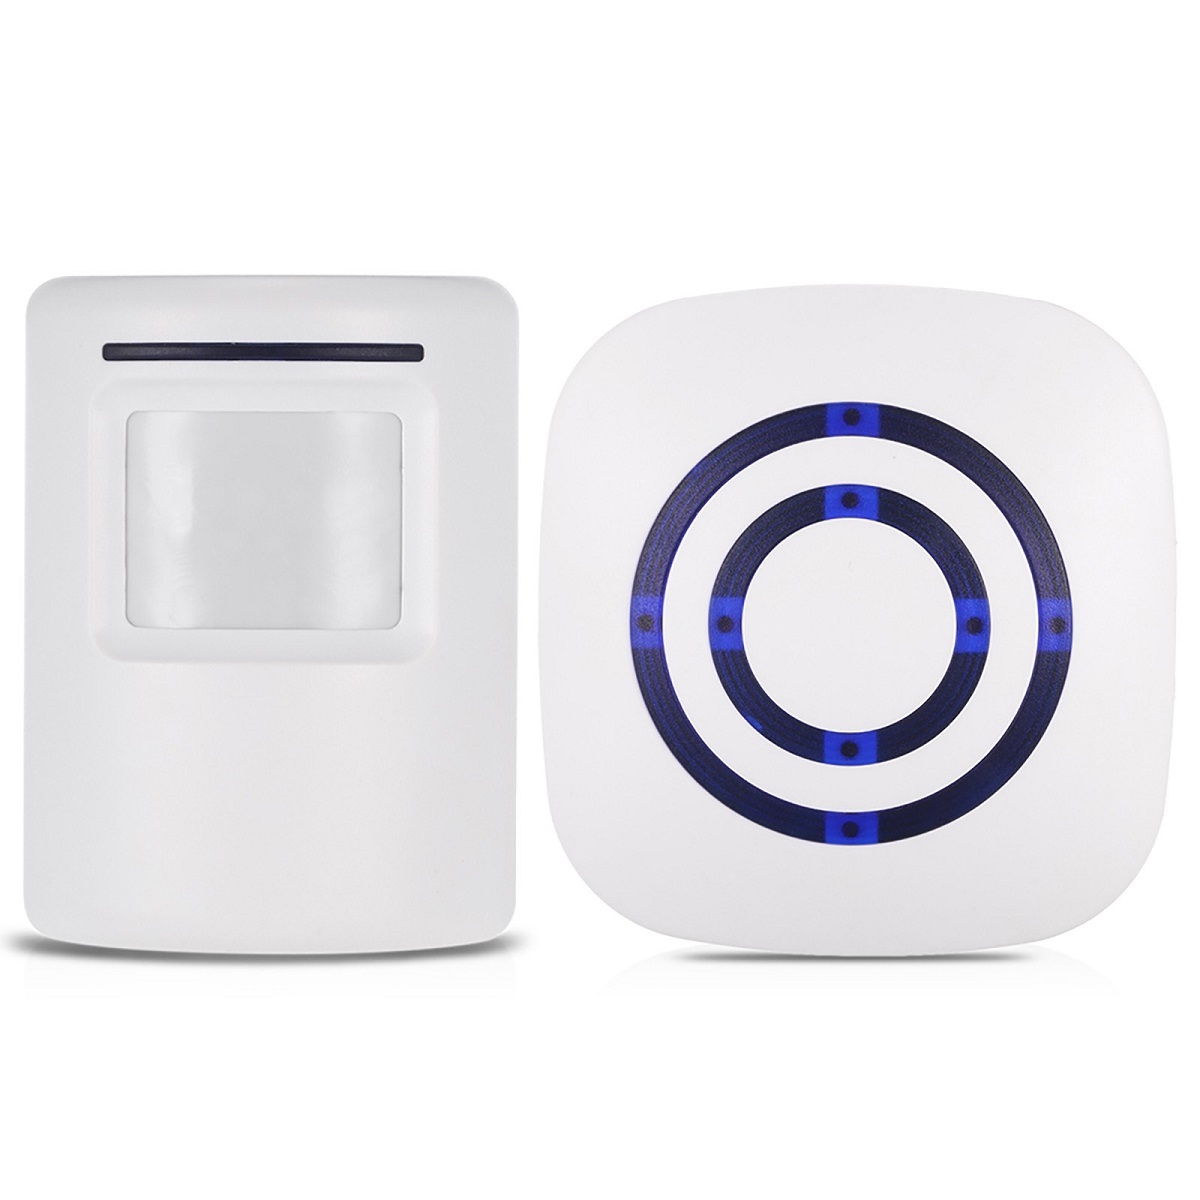 12 Best Motion Sensor Doorbell for 2023